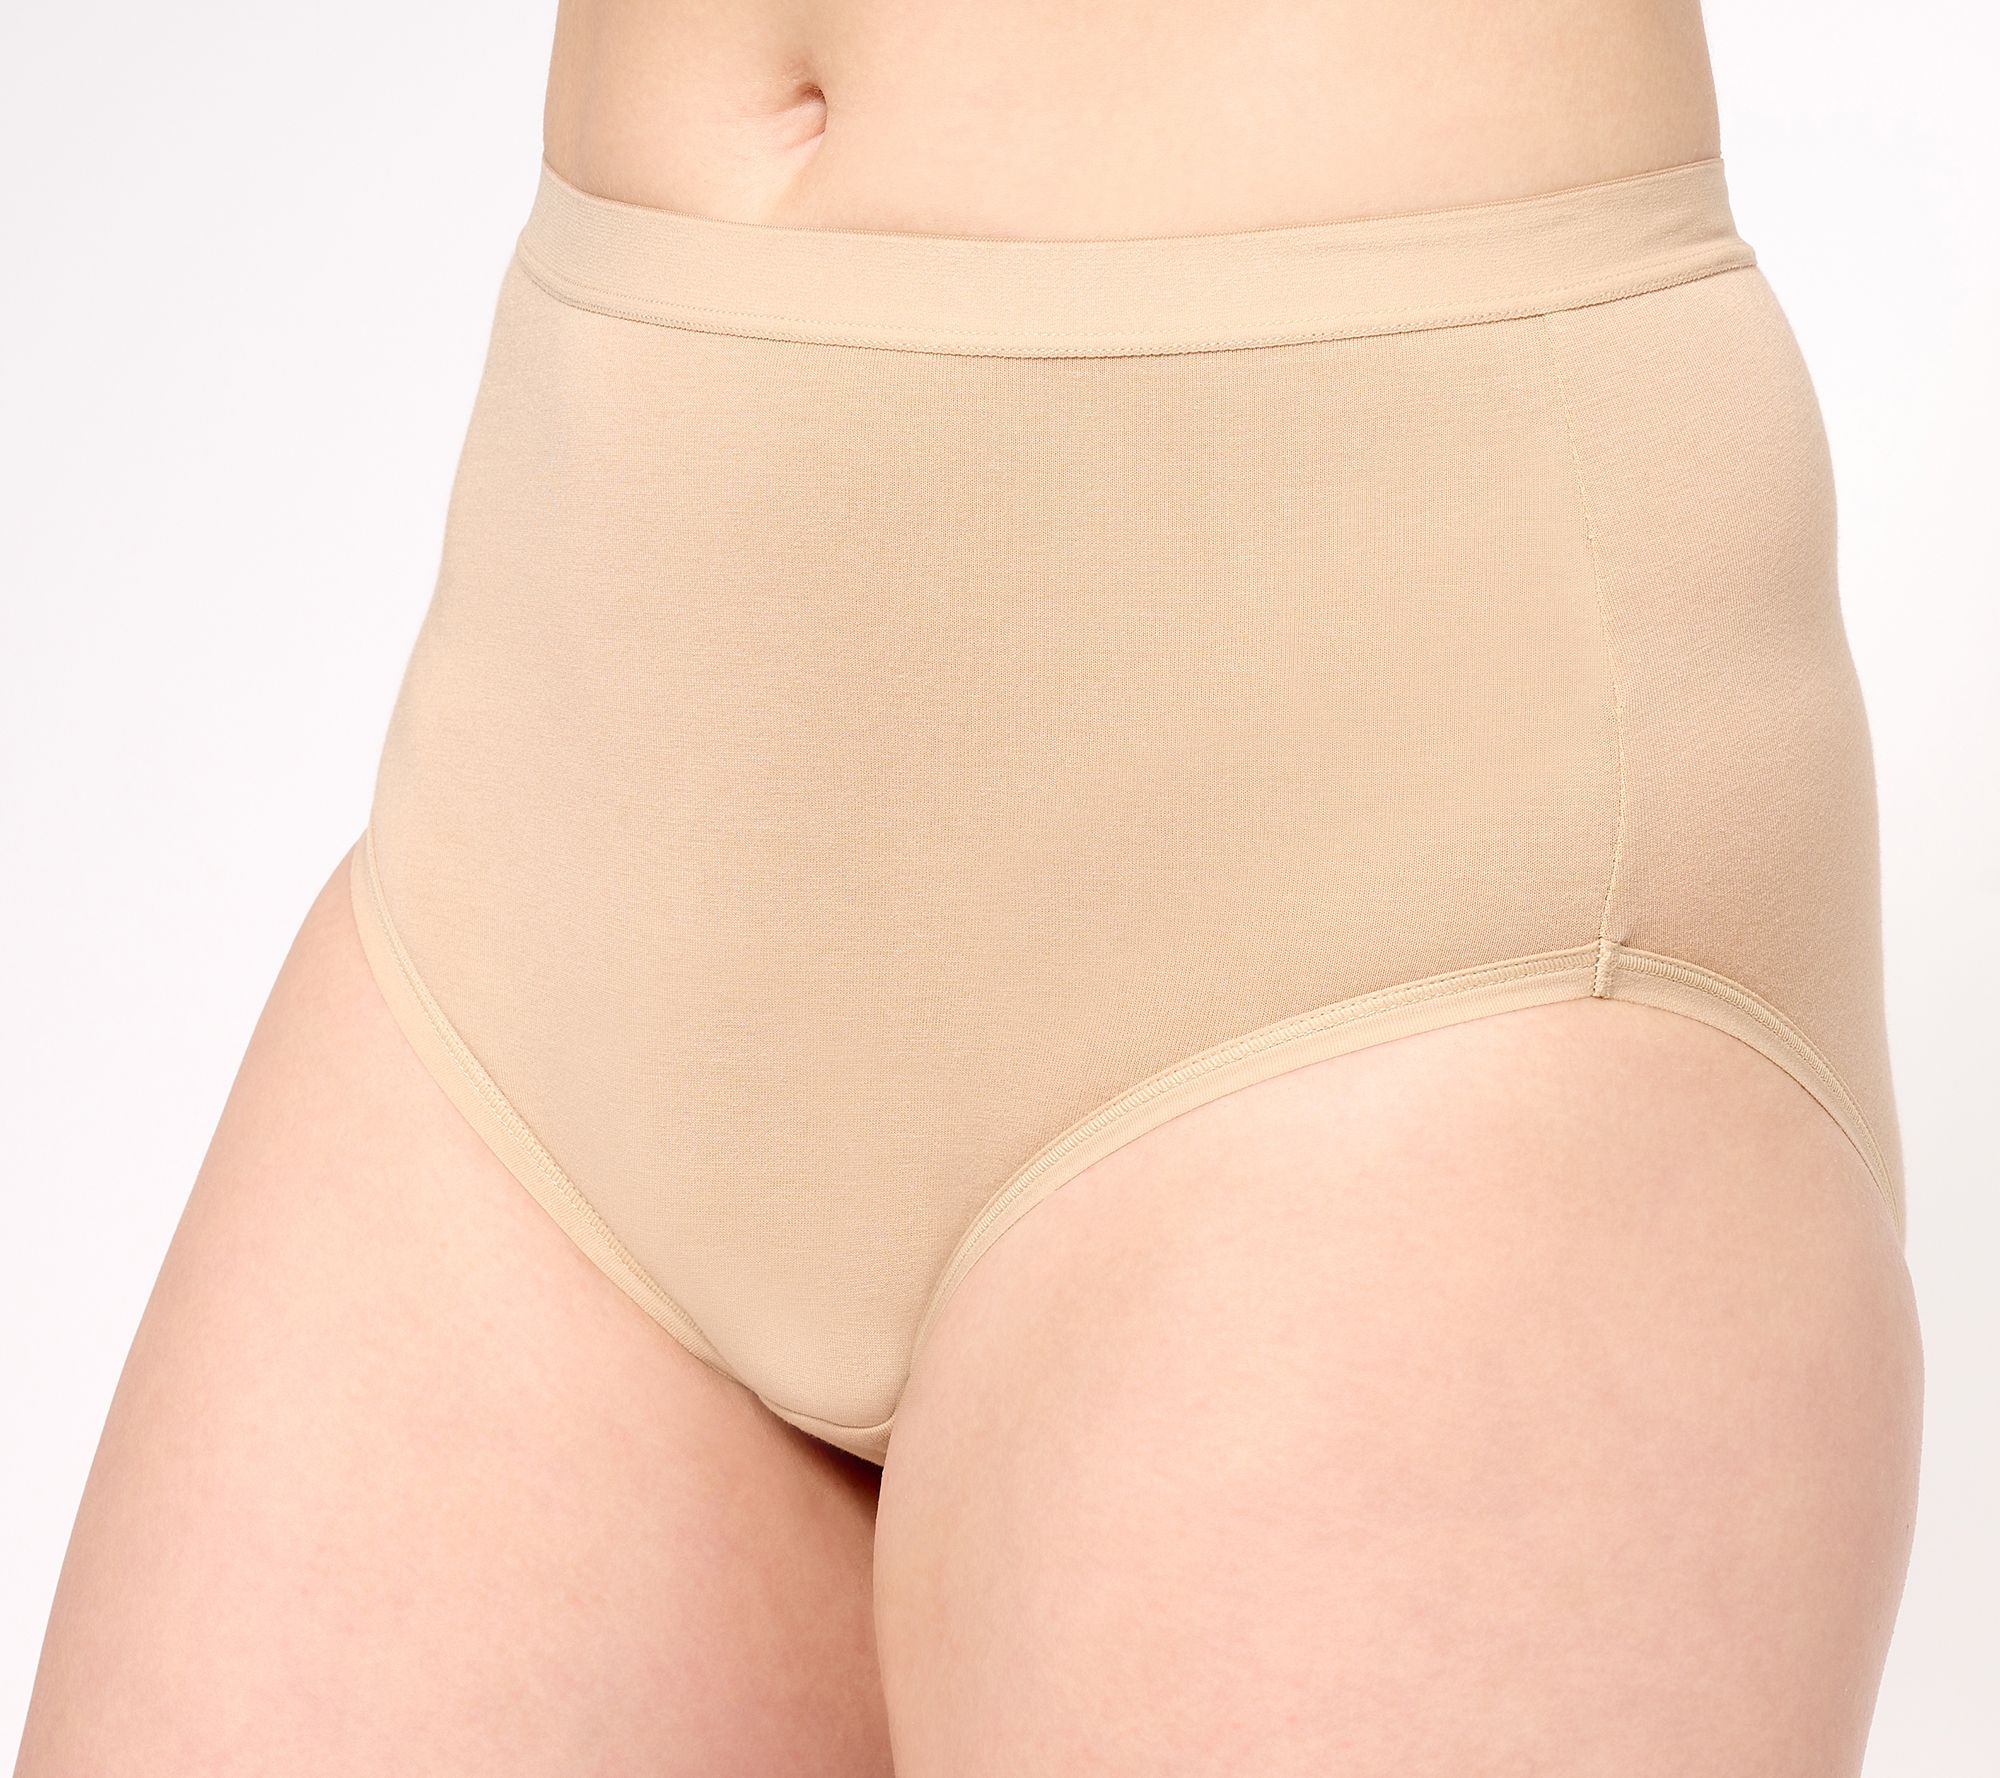 Just My Size - Women's 5 Pack Cotton Hi-Cut Brief Panties Size 9 (14-16)